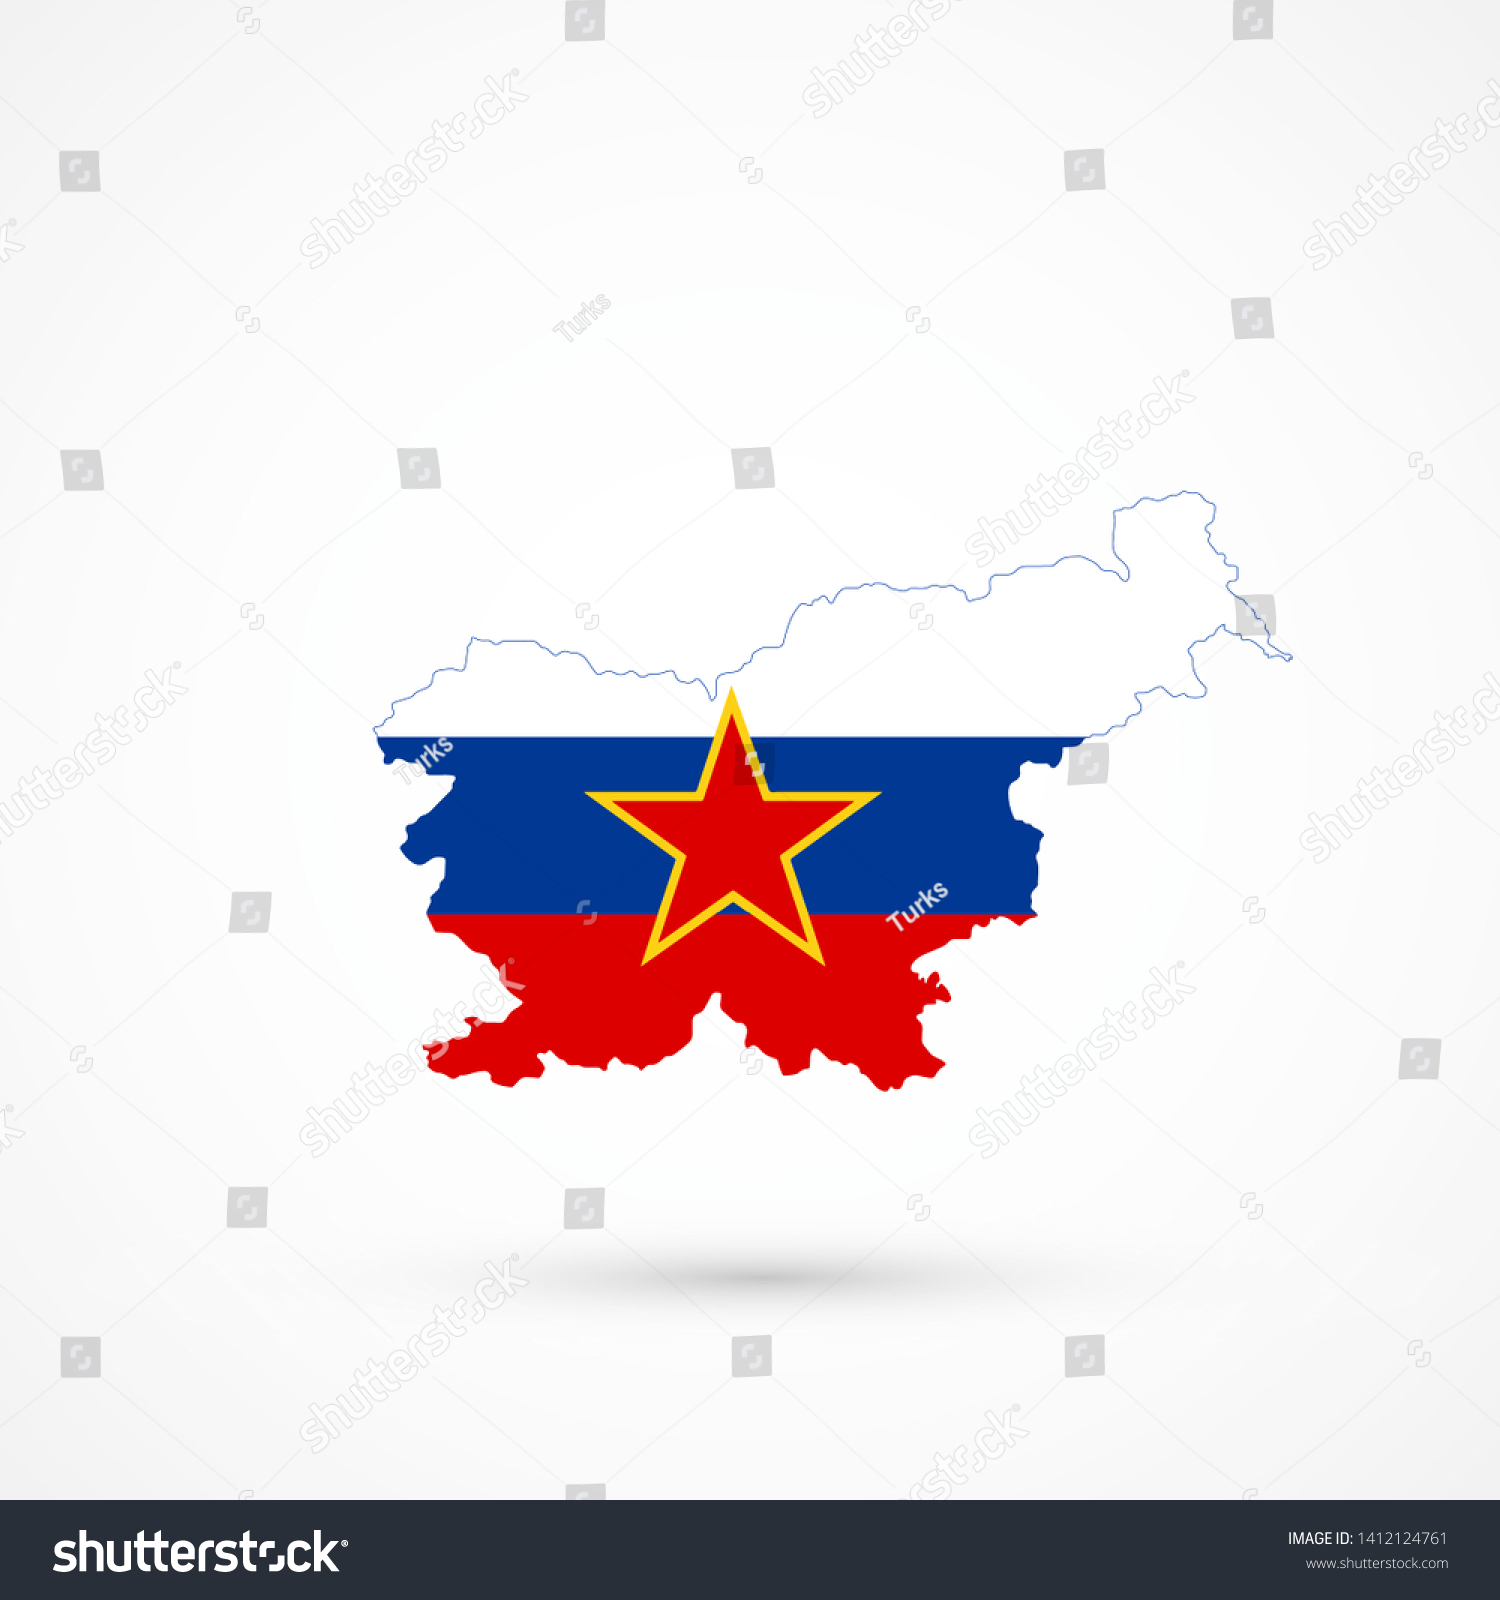 Map Slovenia in Socialist Republic of Slovenia flag colors, editable vector.  #1412124761